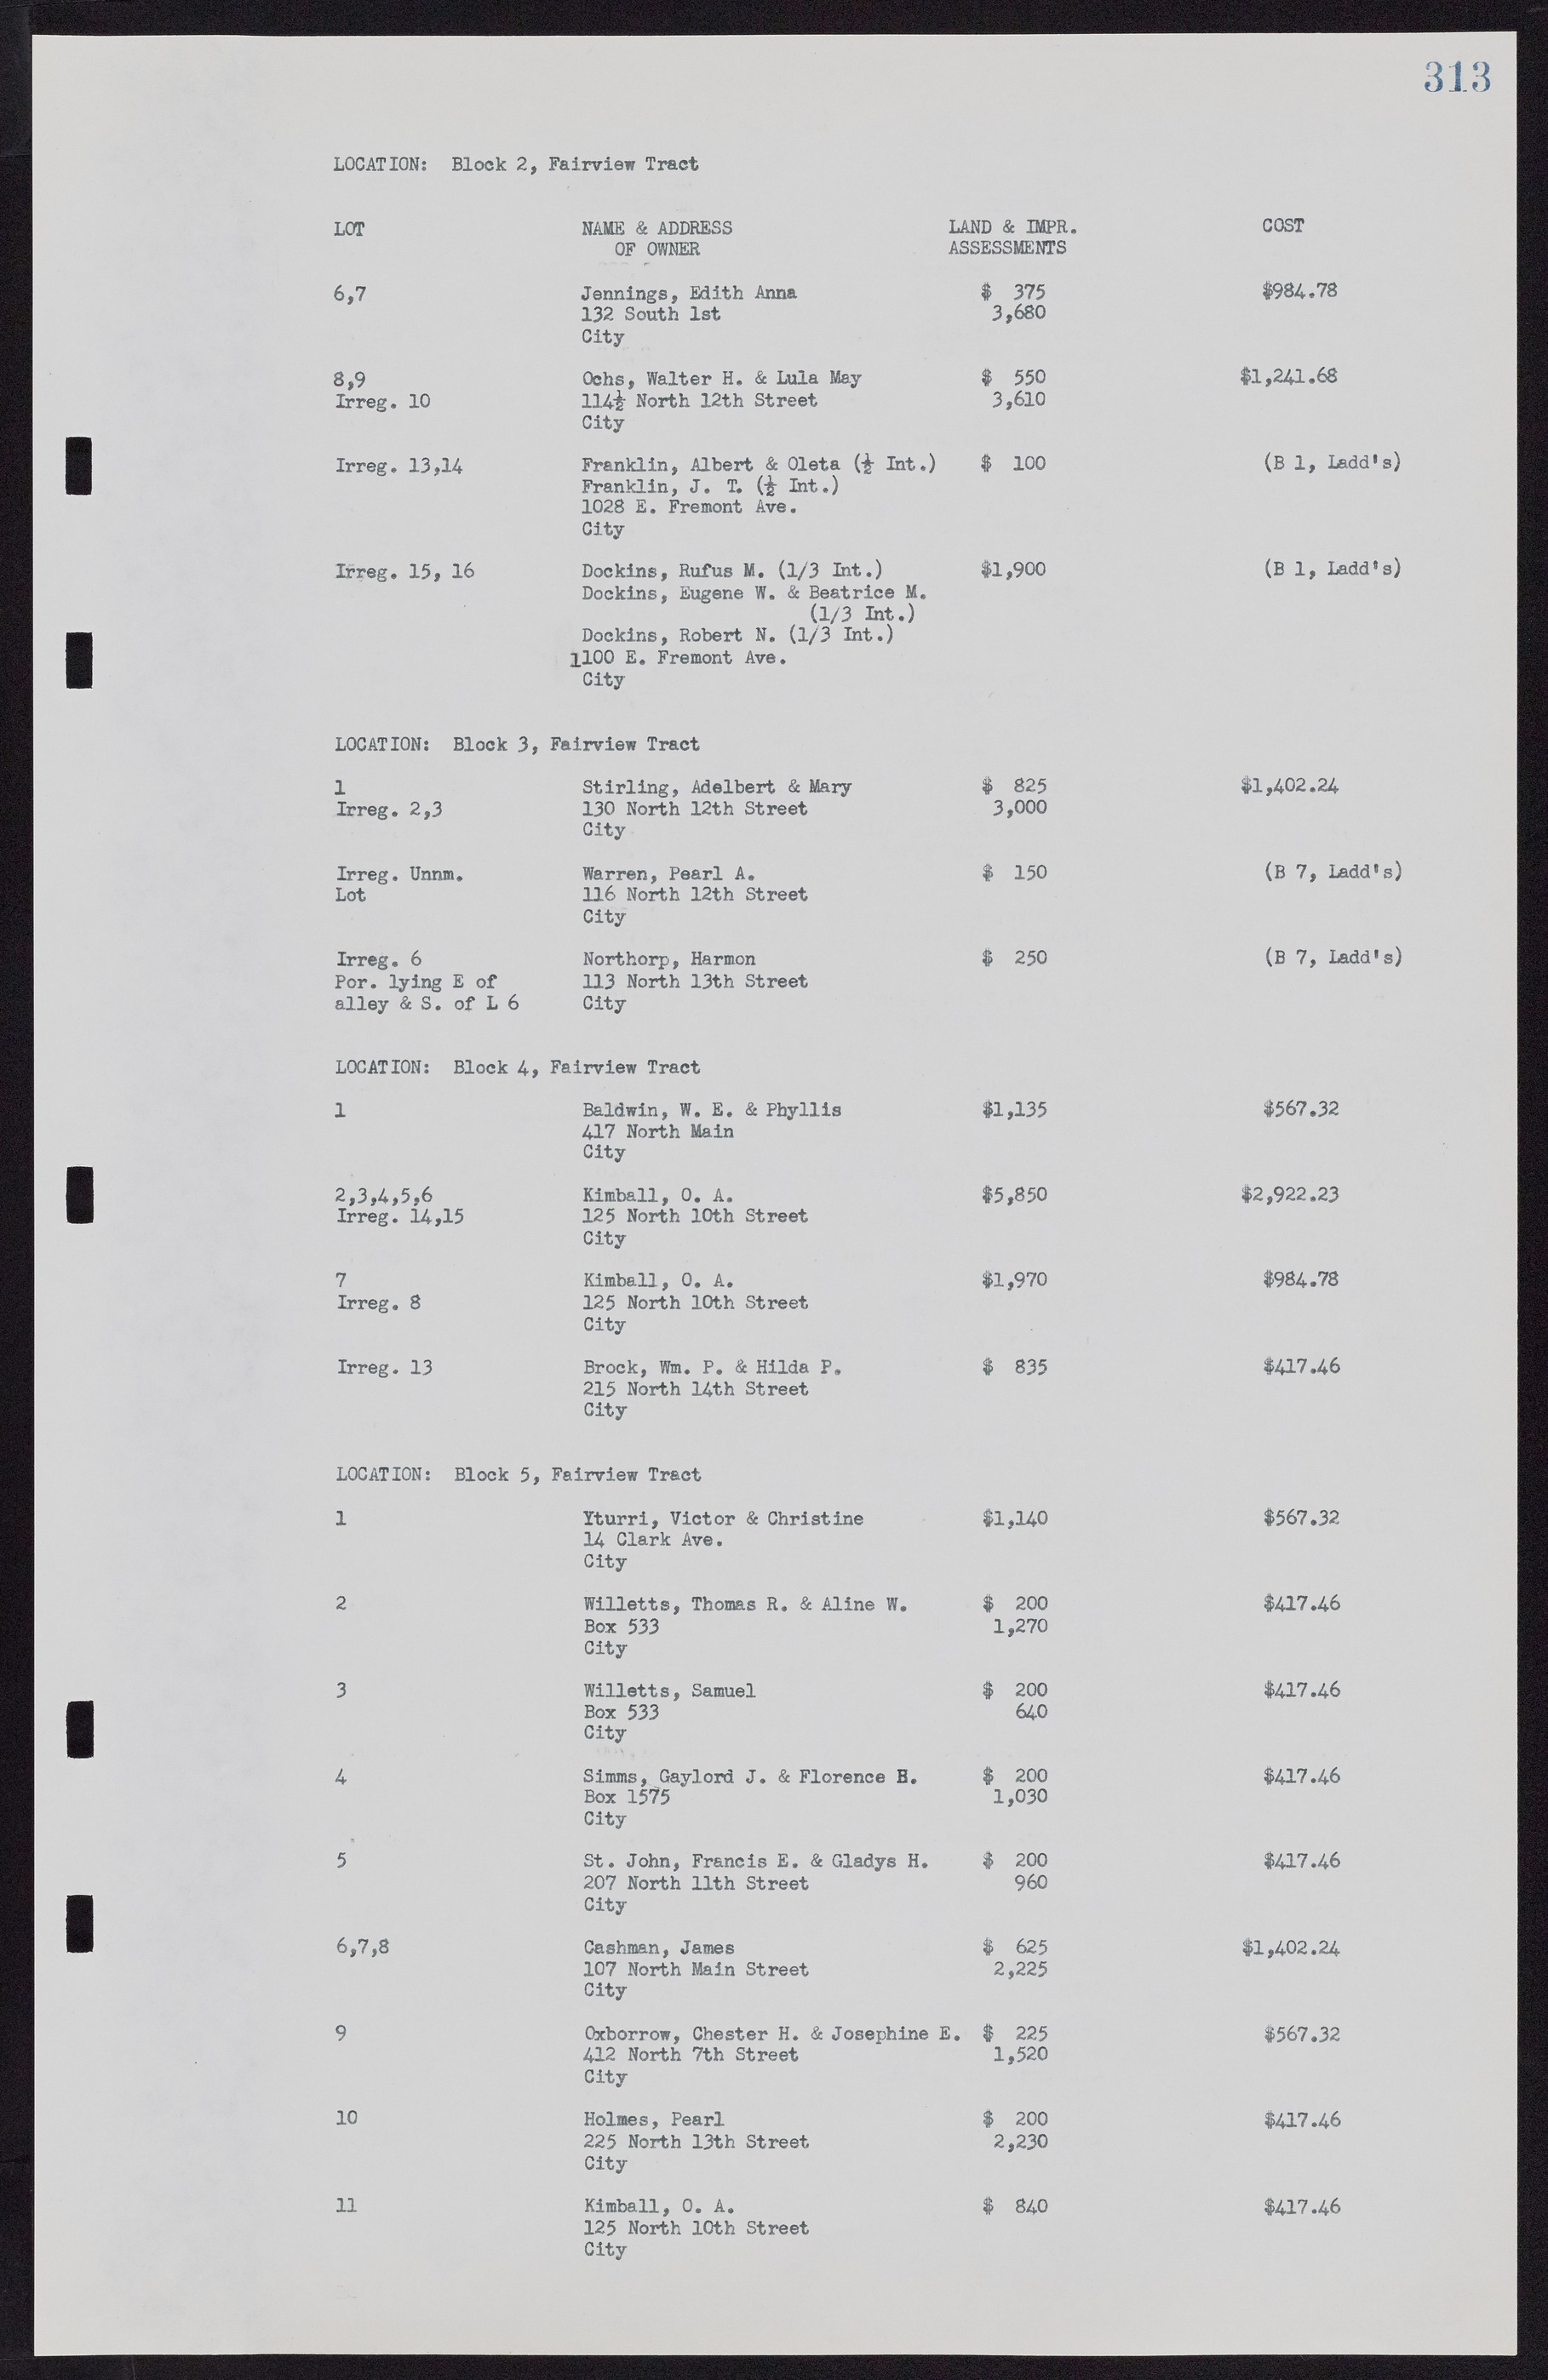 Las Vegas City Commission Minutes, November 7, 1949 to May 21, 1952, lvc000007-325